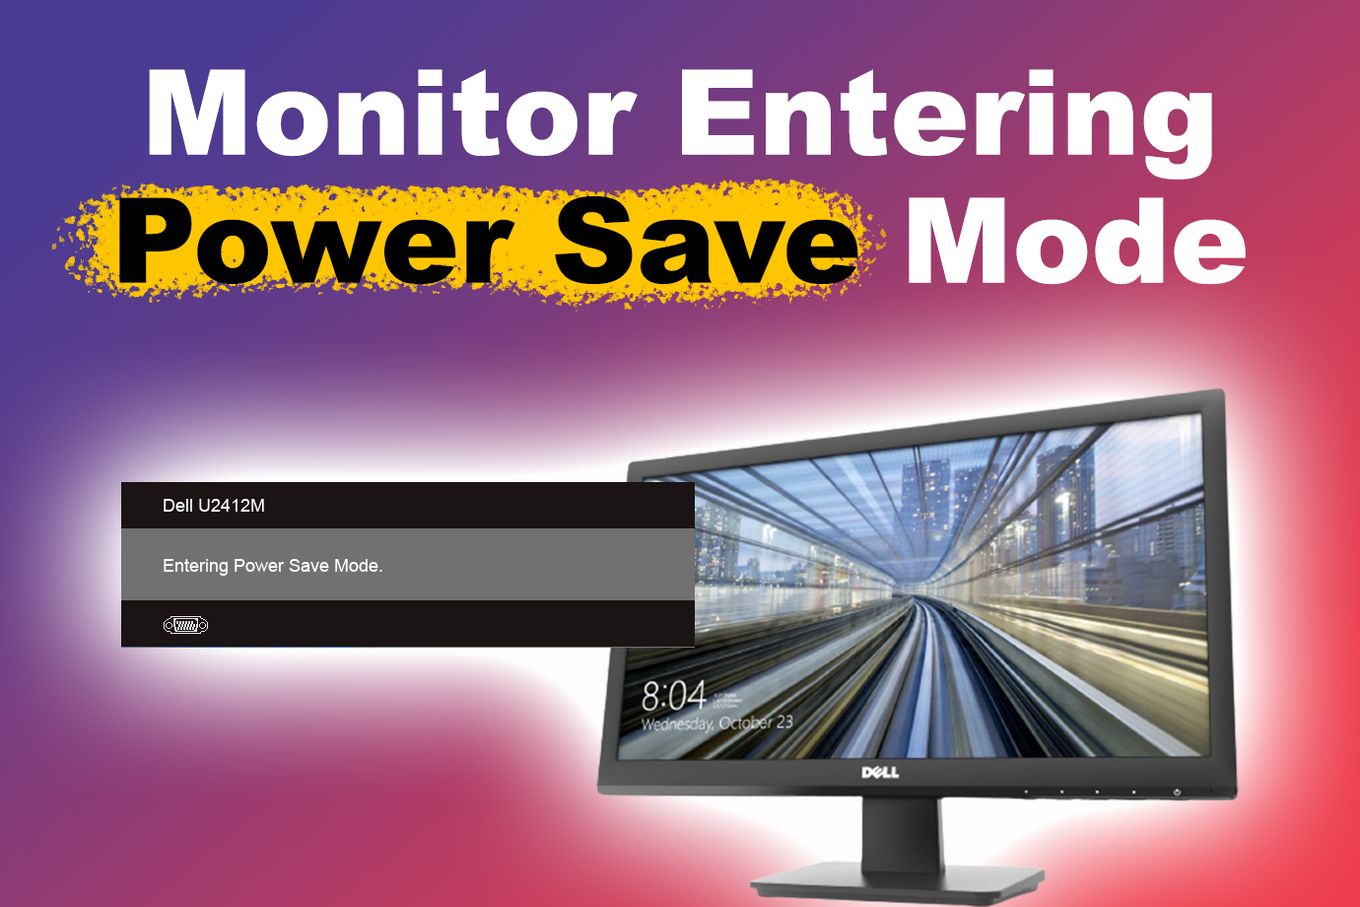 Monitor Entering Power Save Mode